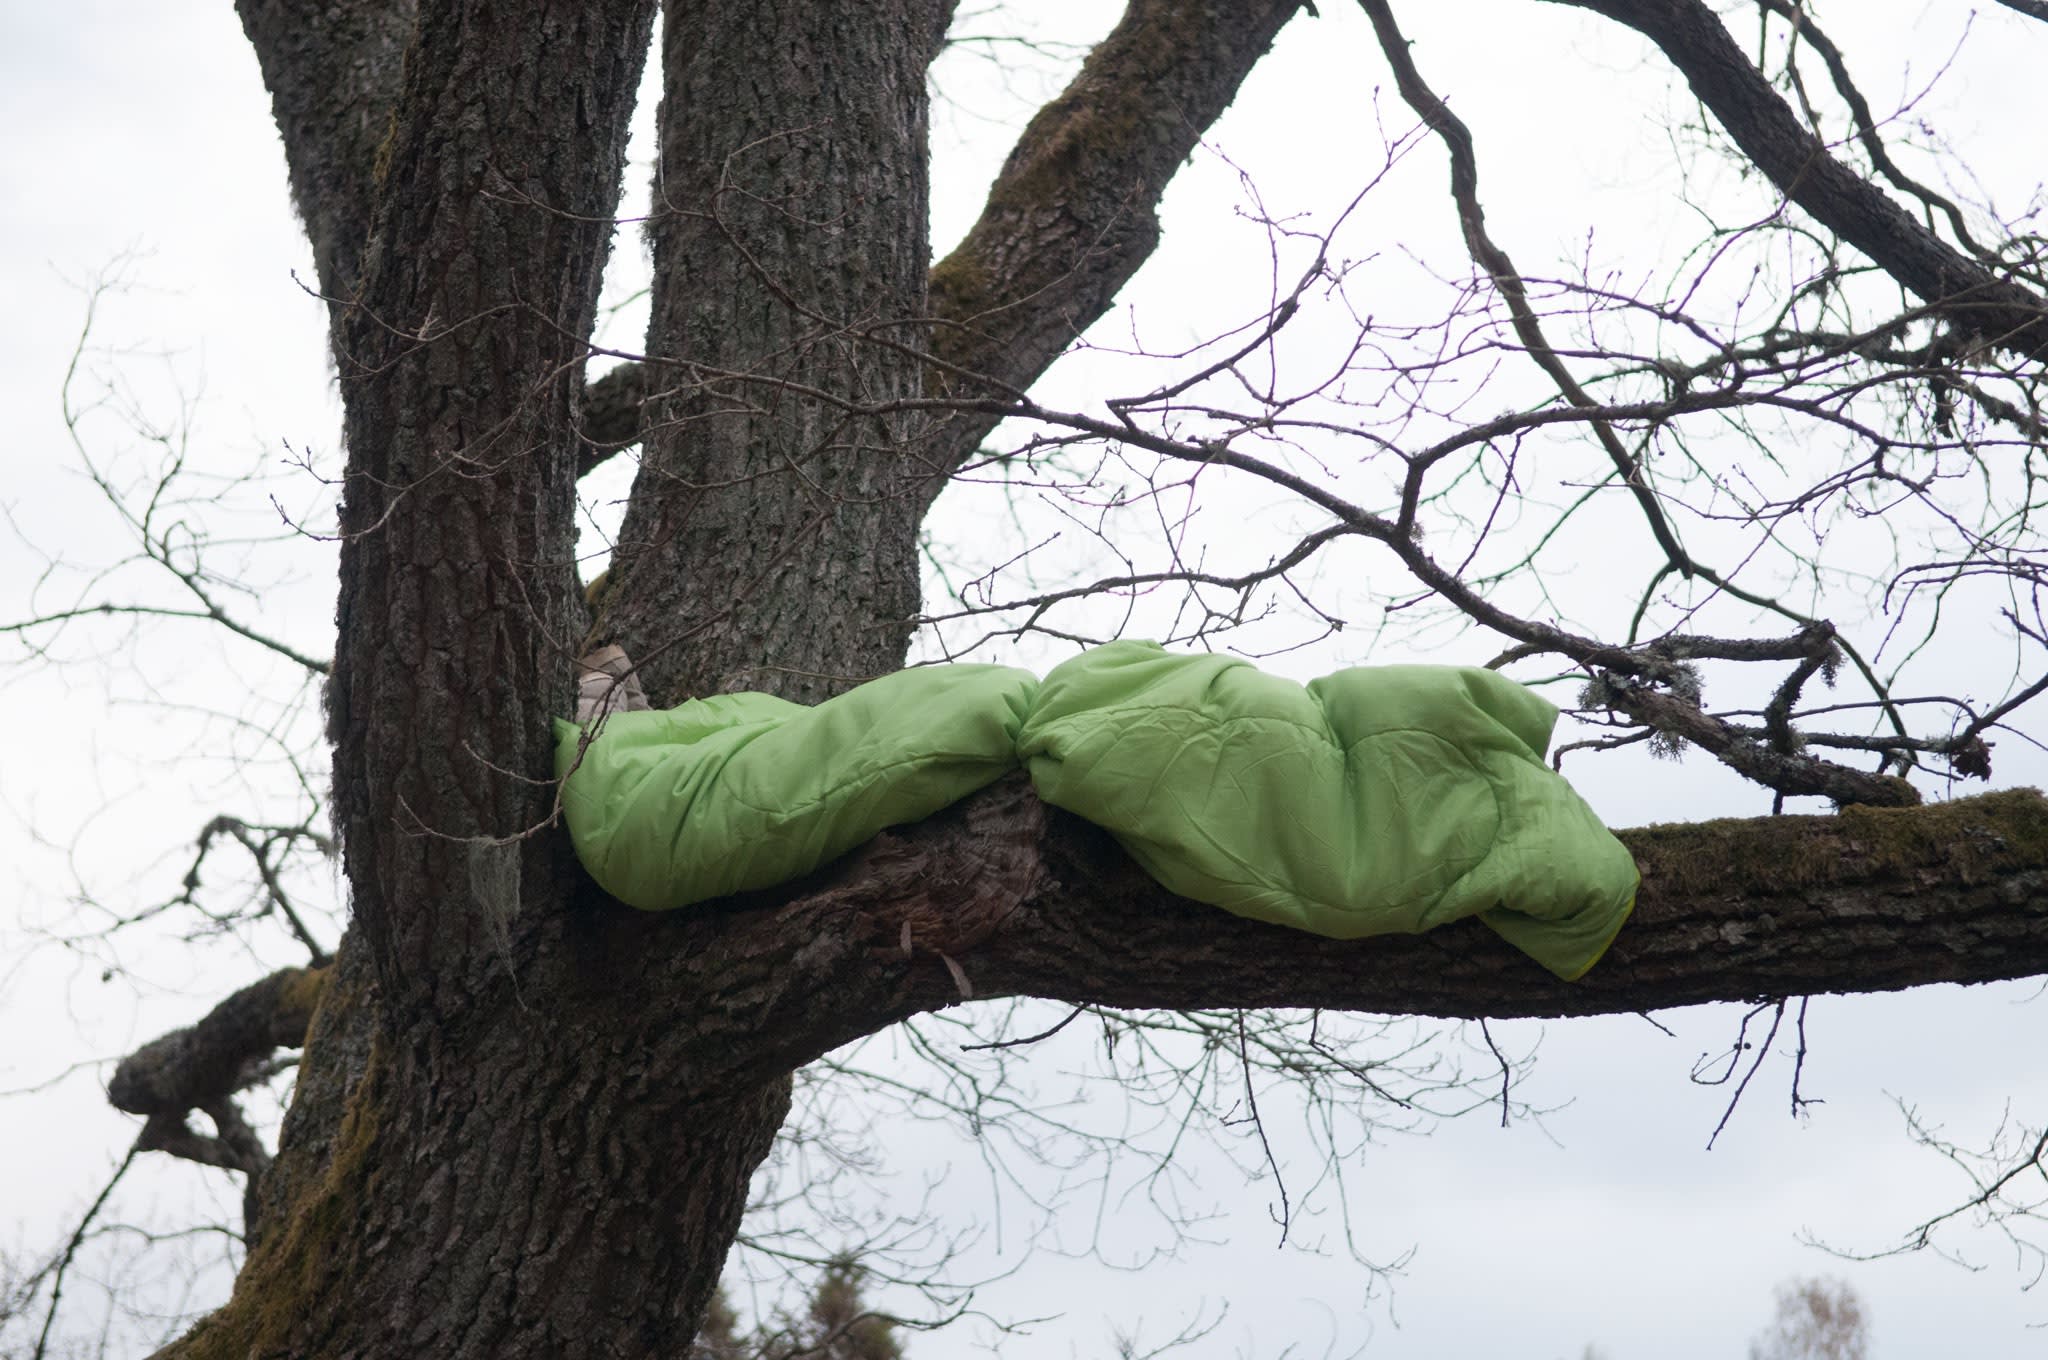 Lime green sleeping bag lies on tree branch.